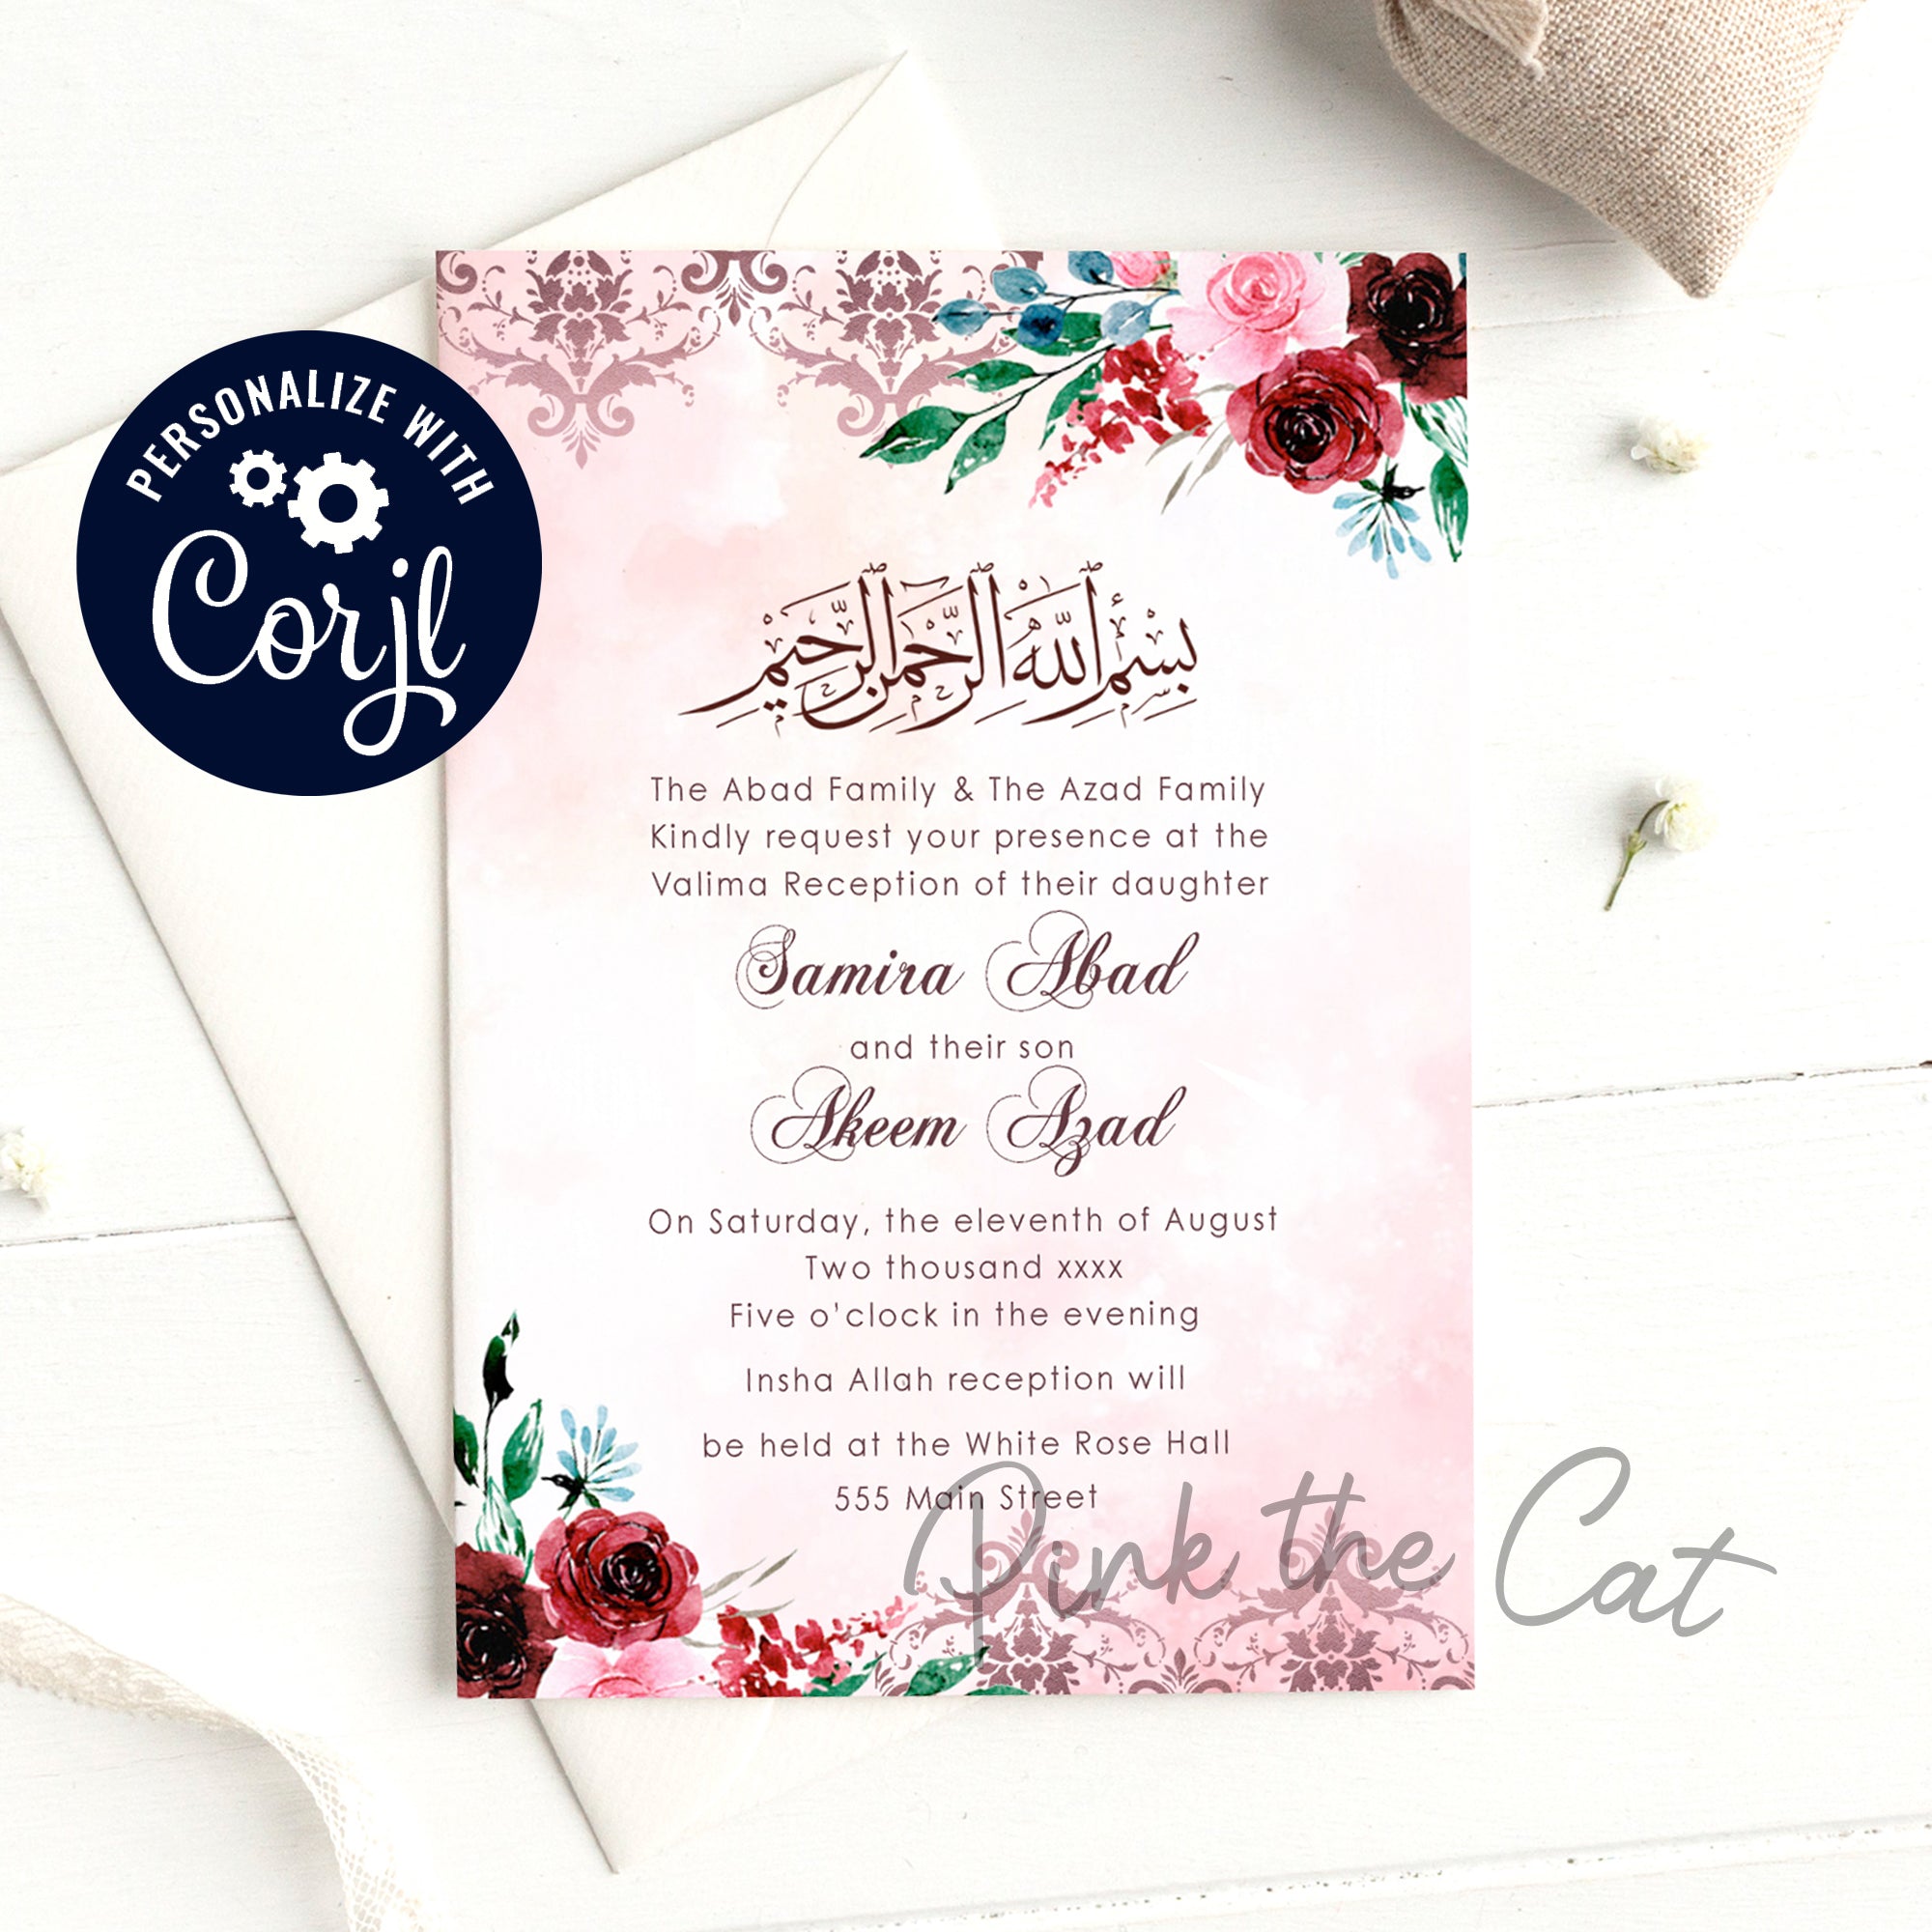 Walima nikah wedding invitations red roses